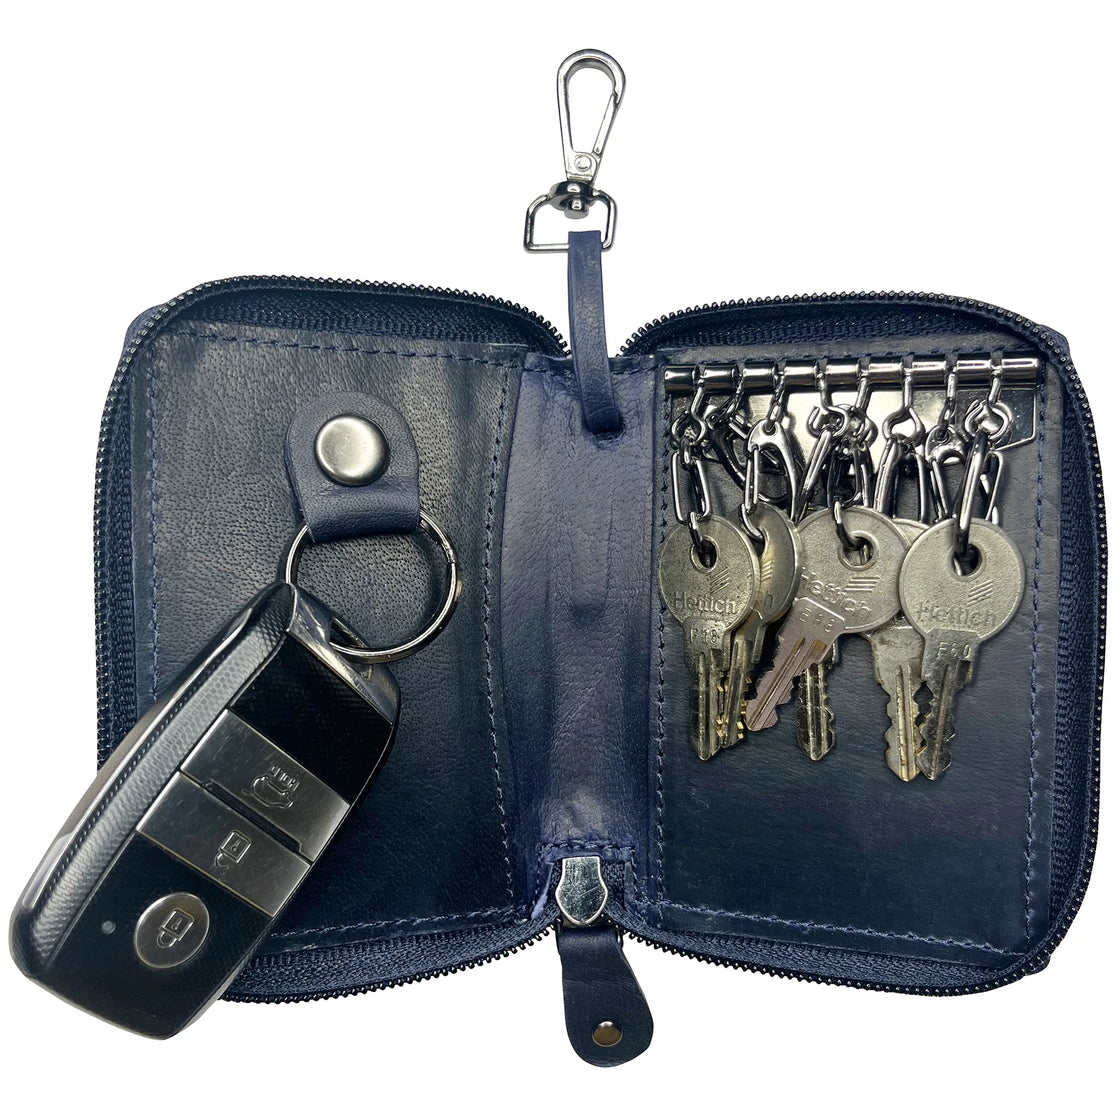 Cobalt Blue Leather Zipped Key Holder